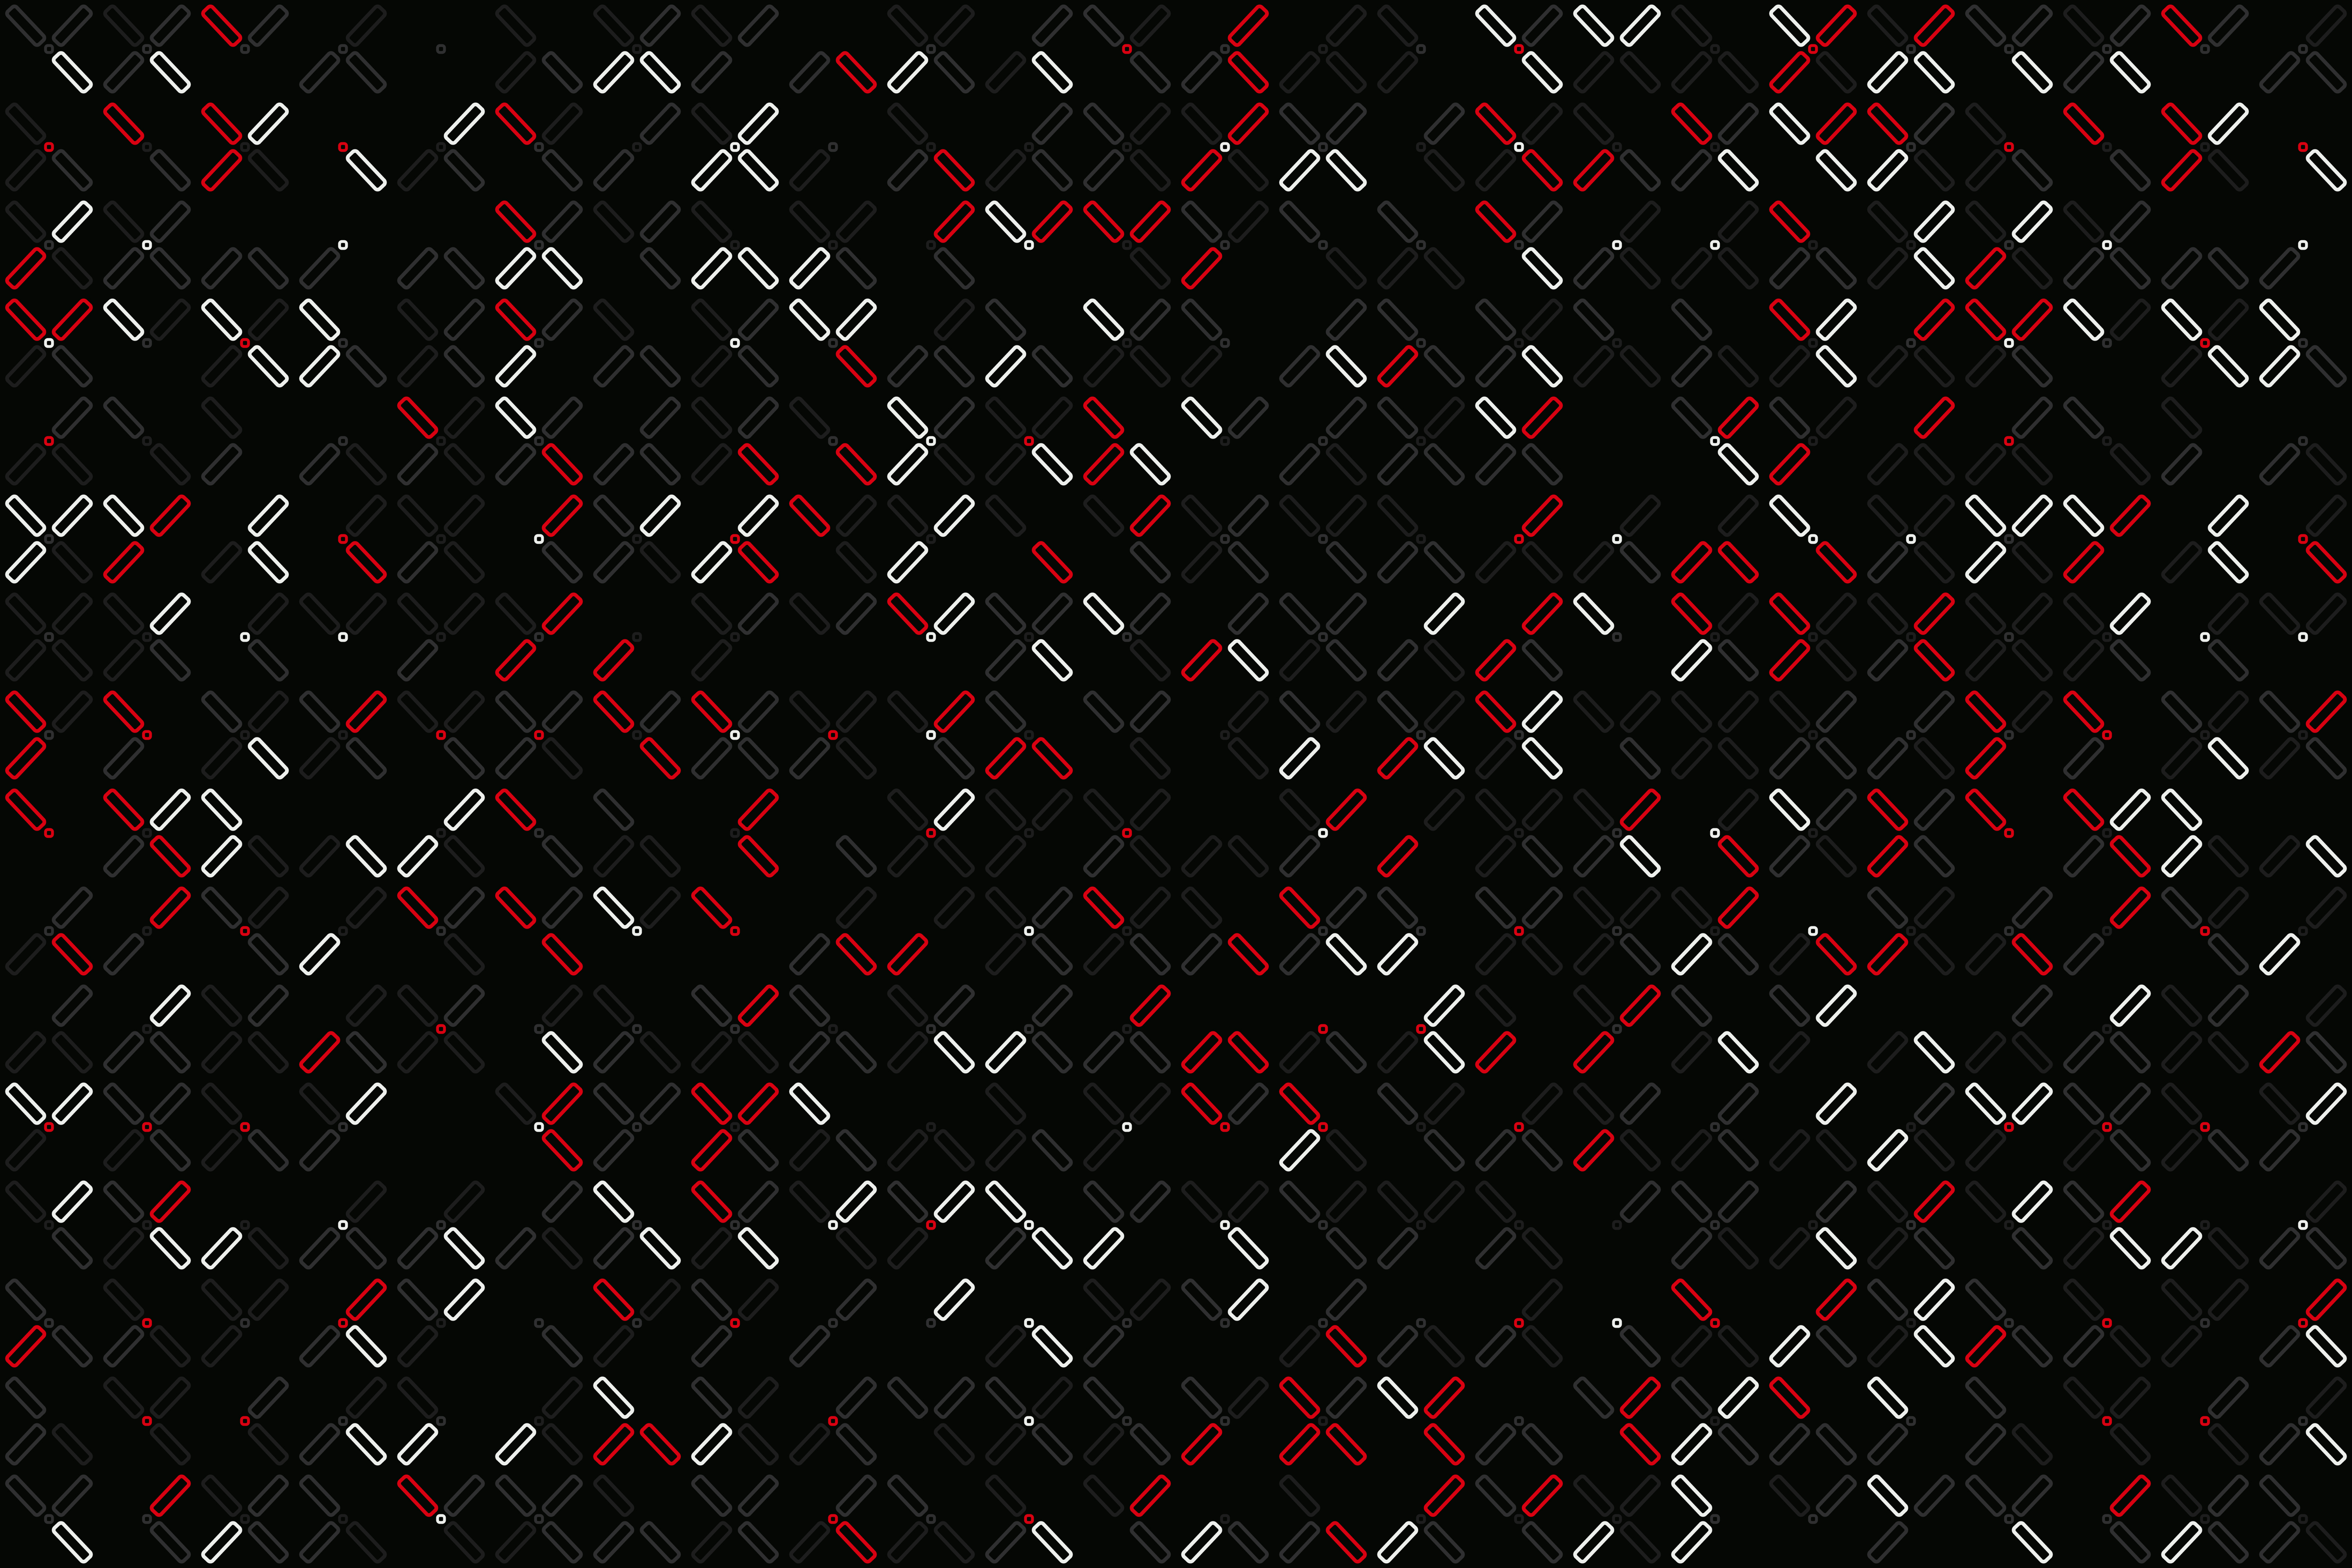 General 6000x4000 pattern artwork digital art red black vector abstract